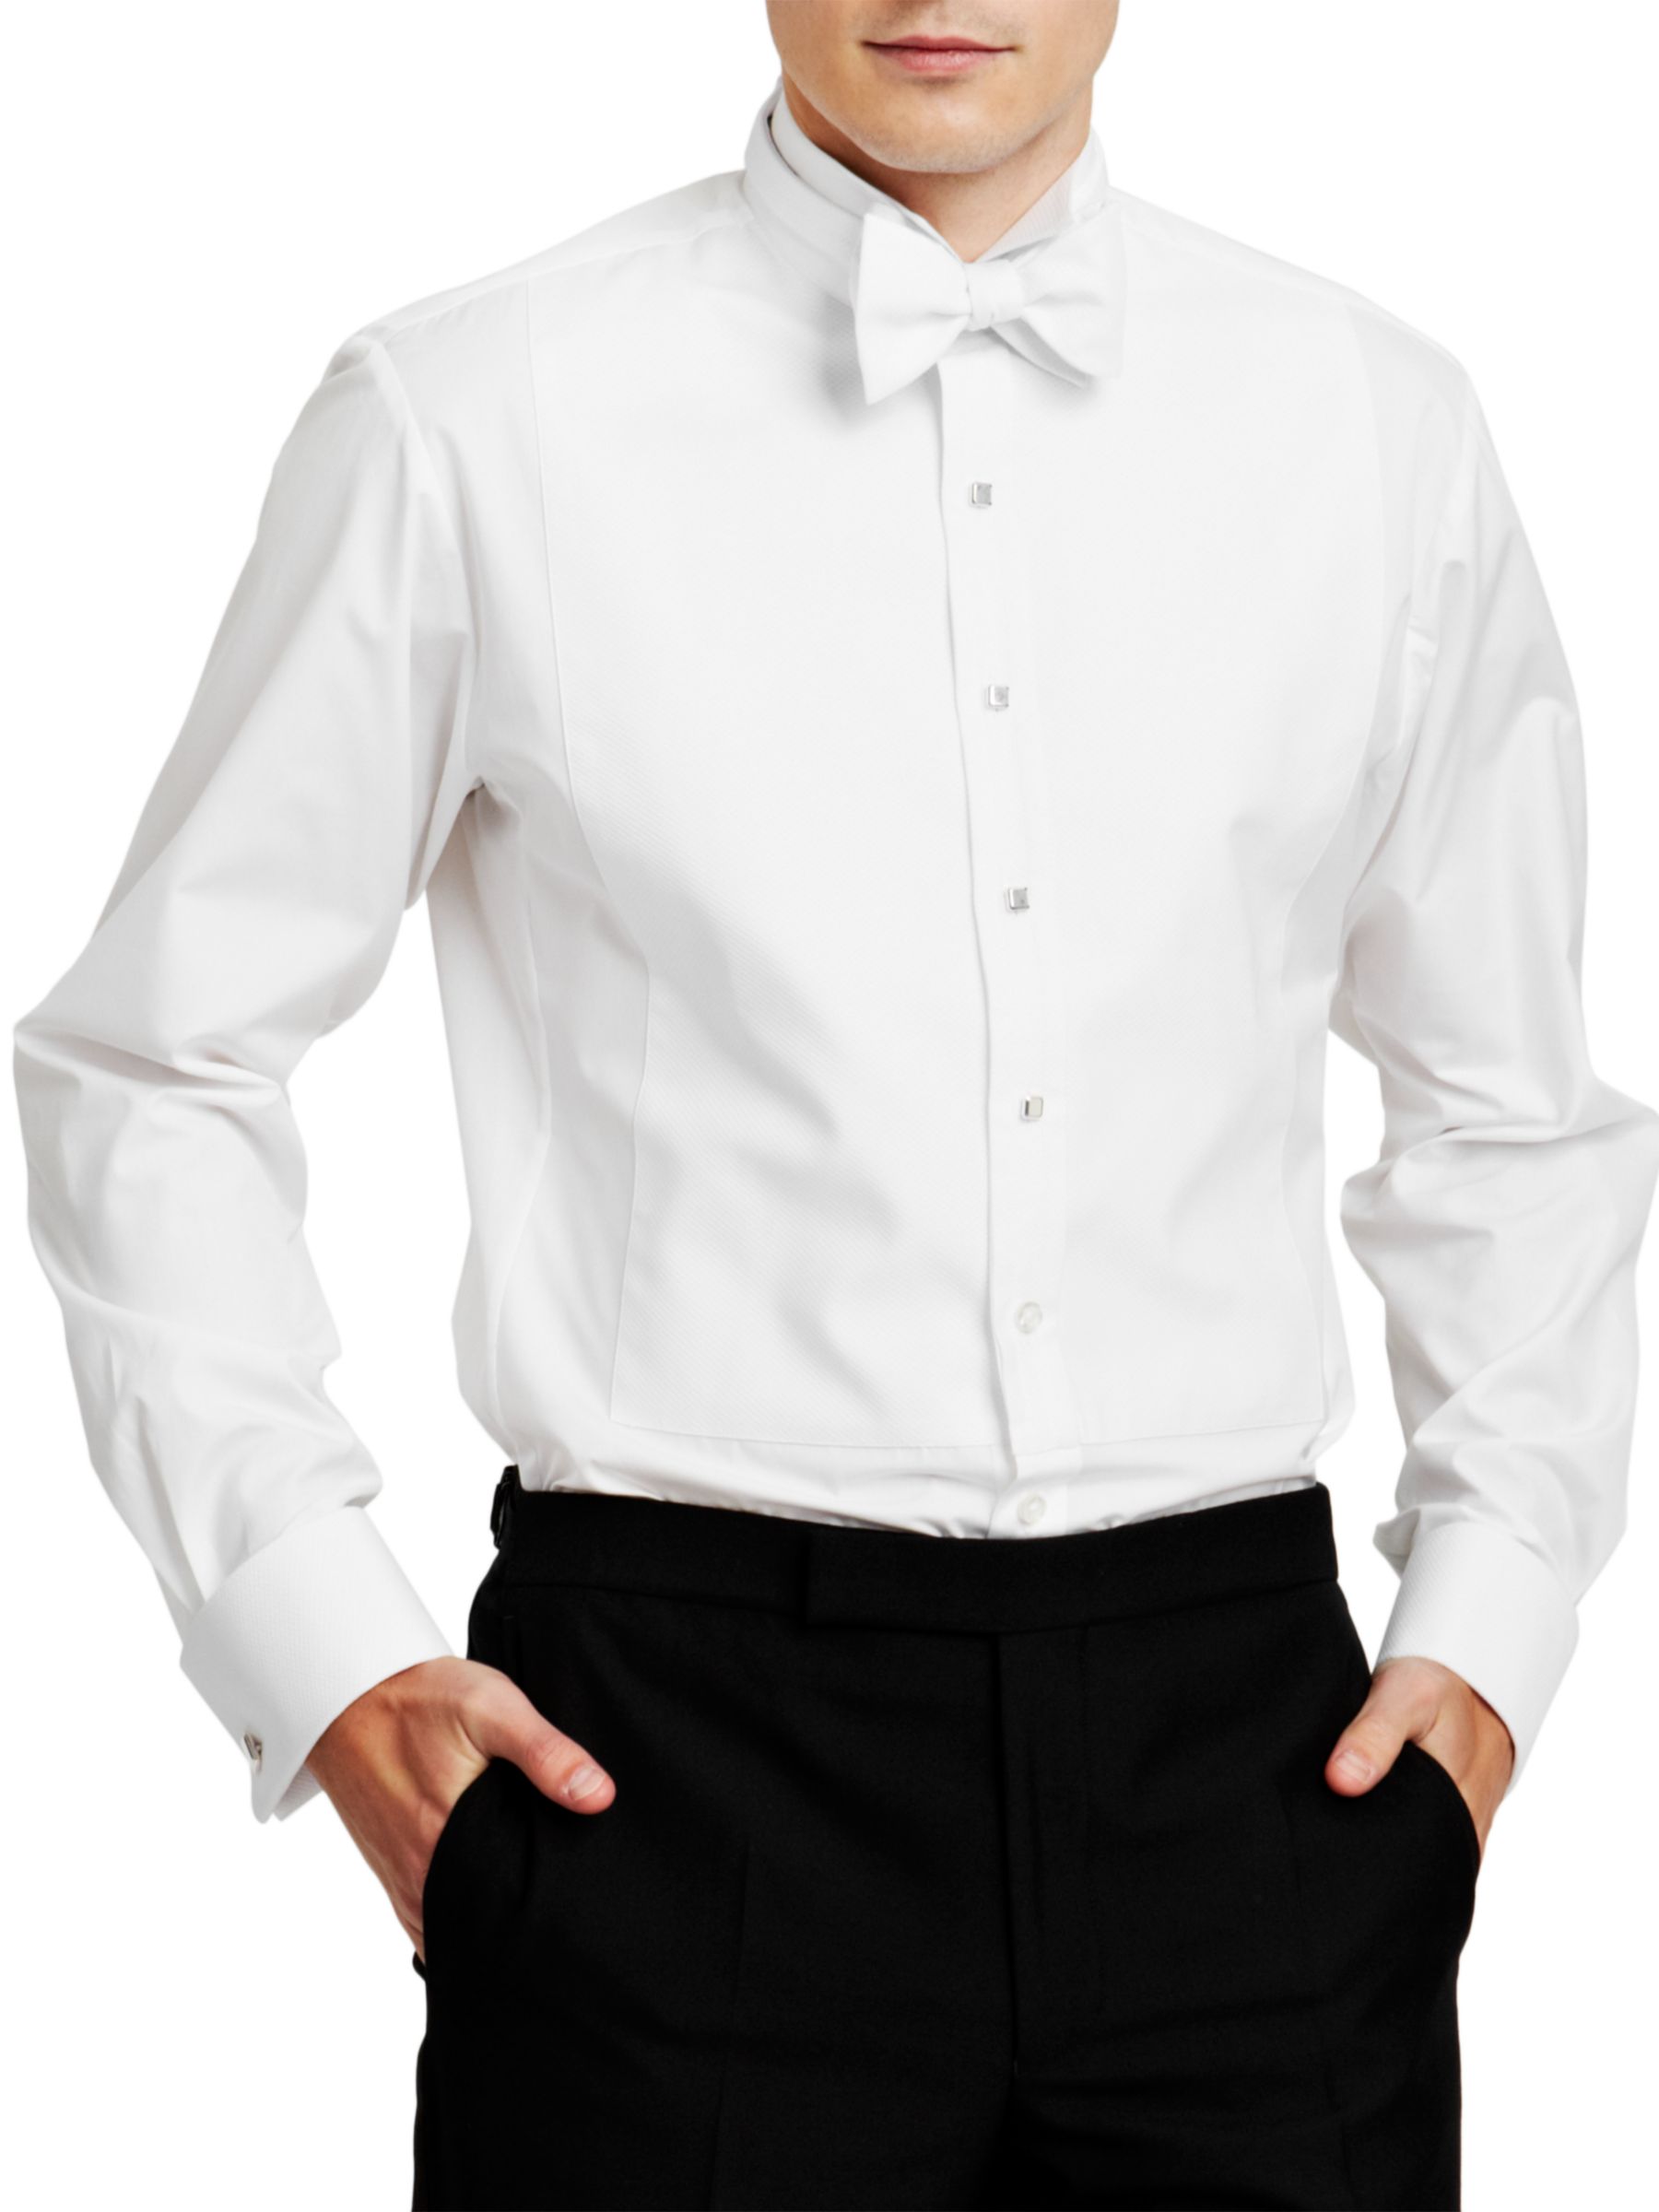 mens formal evening dress shirts